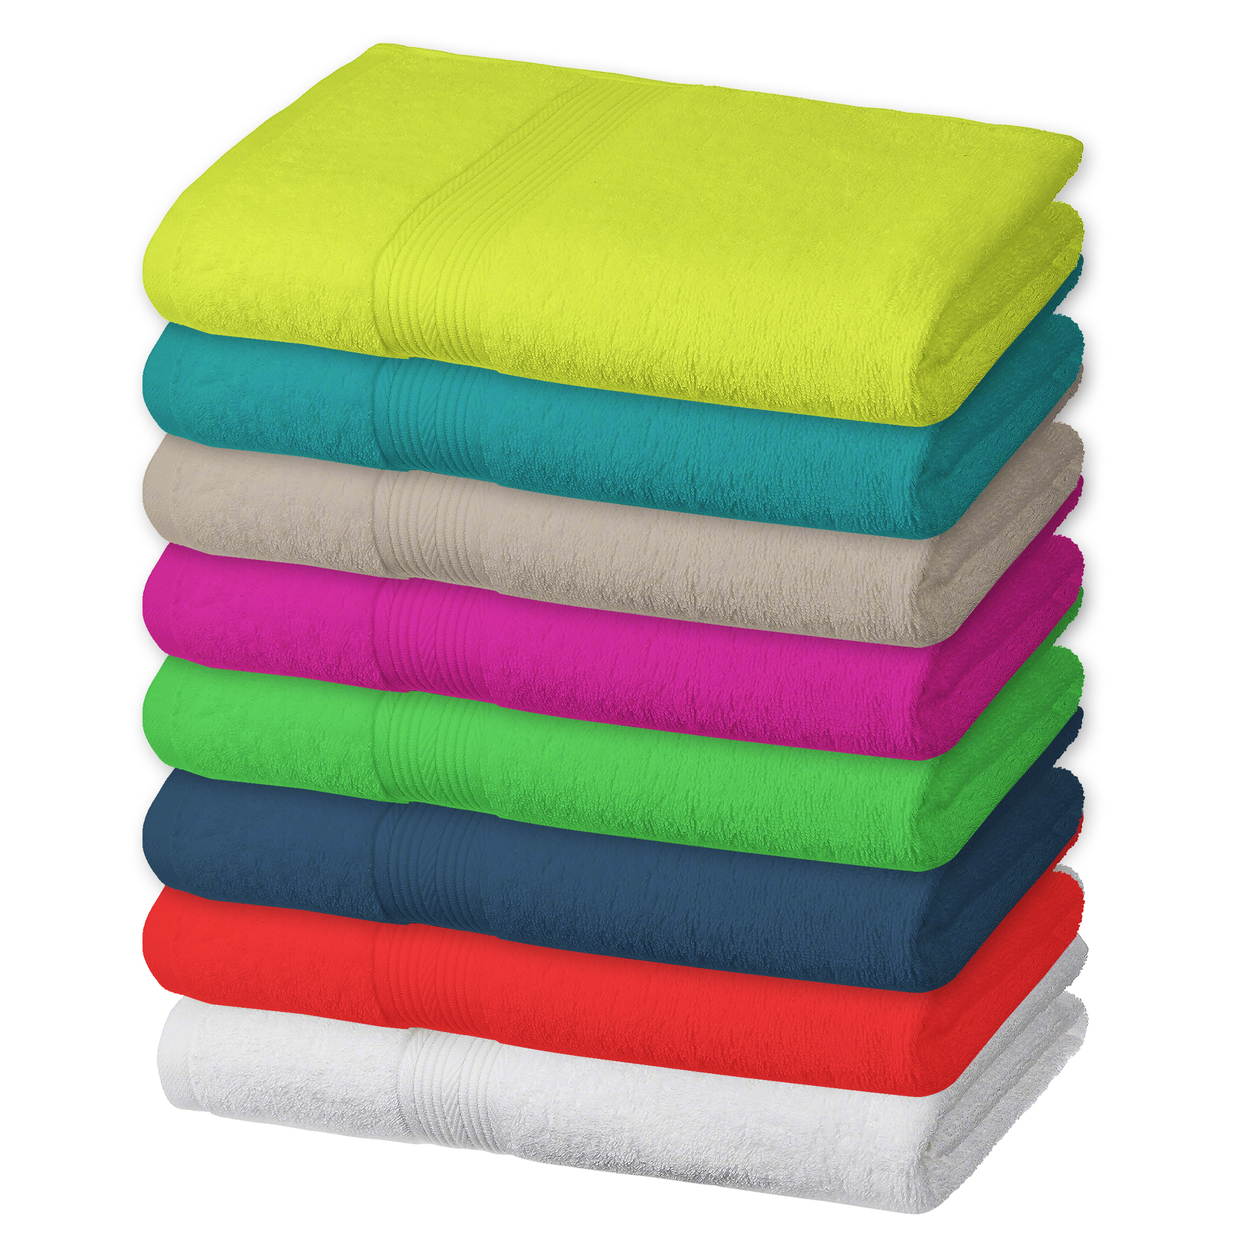 Super Absorbent 100% Cotton 54 X 27 Hotel Beach Bath Towels - Yellow